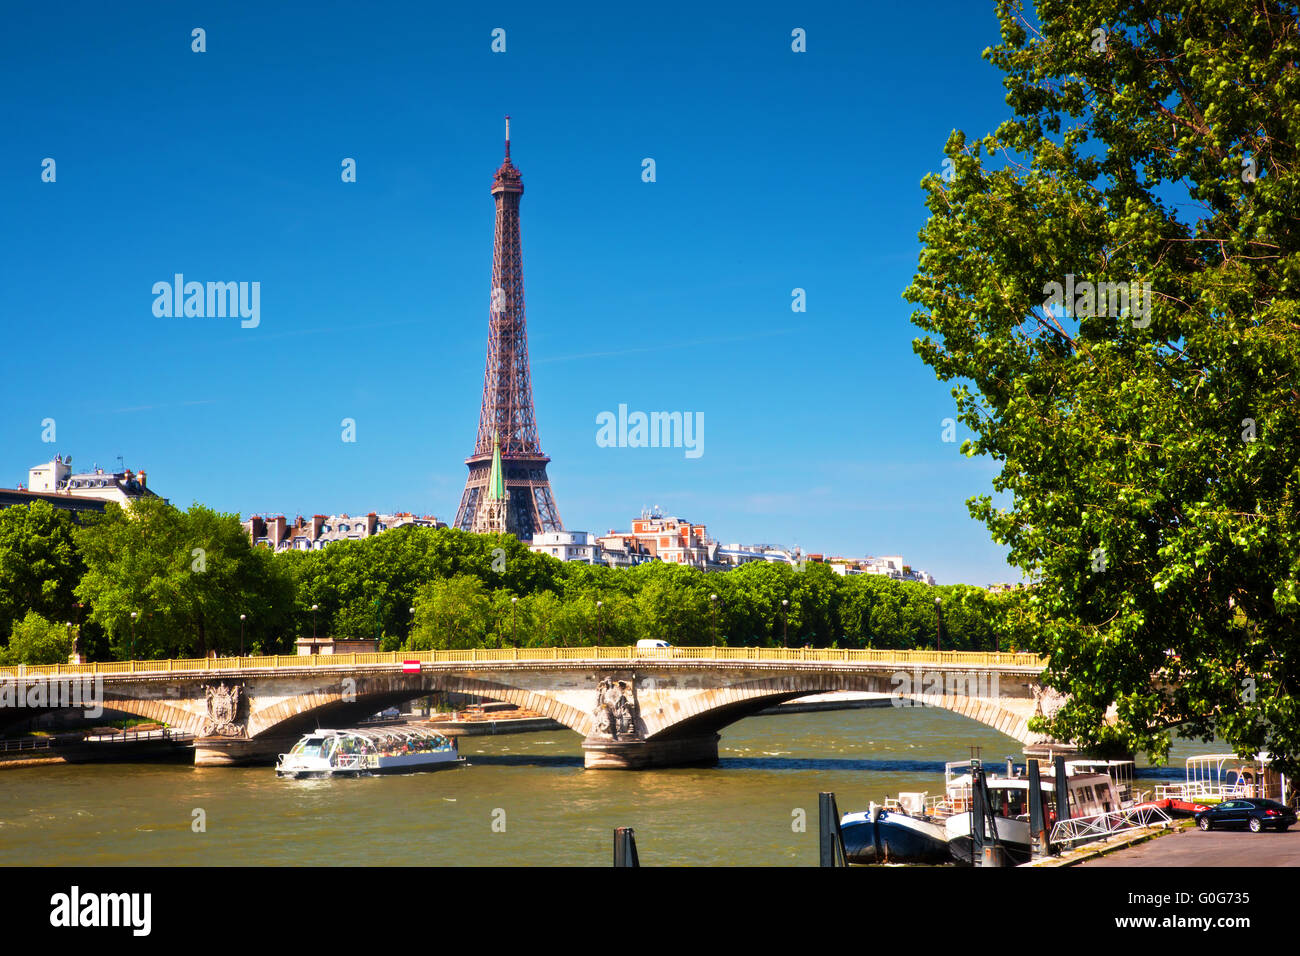 Eiffel Tower and bridge on Seine river in Paris, France. Stock Photo